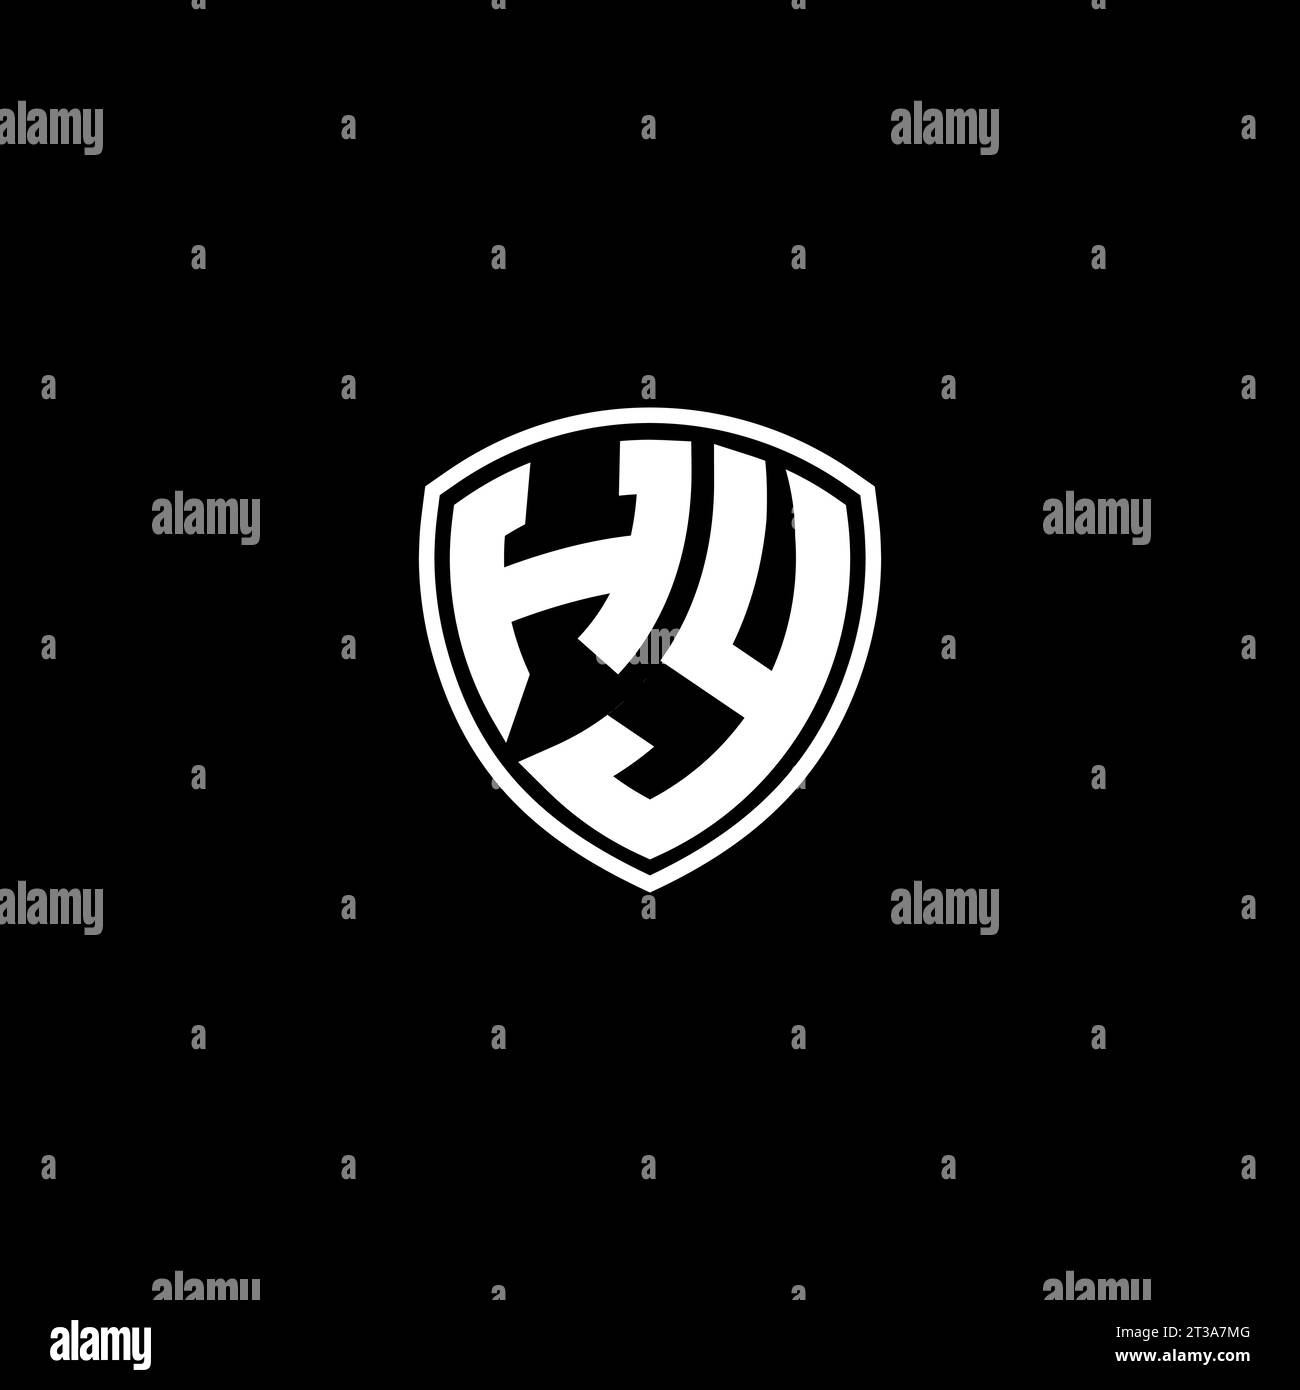 HY logo monogram emblem style with shield shape design template ideas Stock Vector